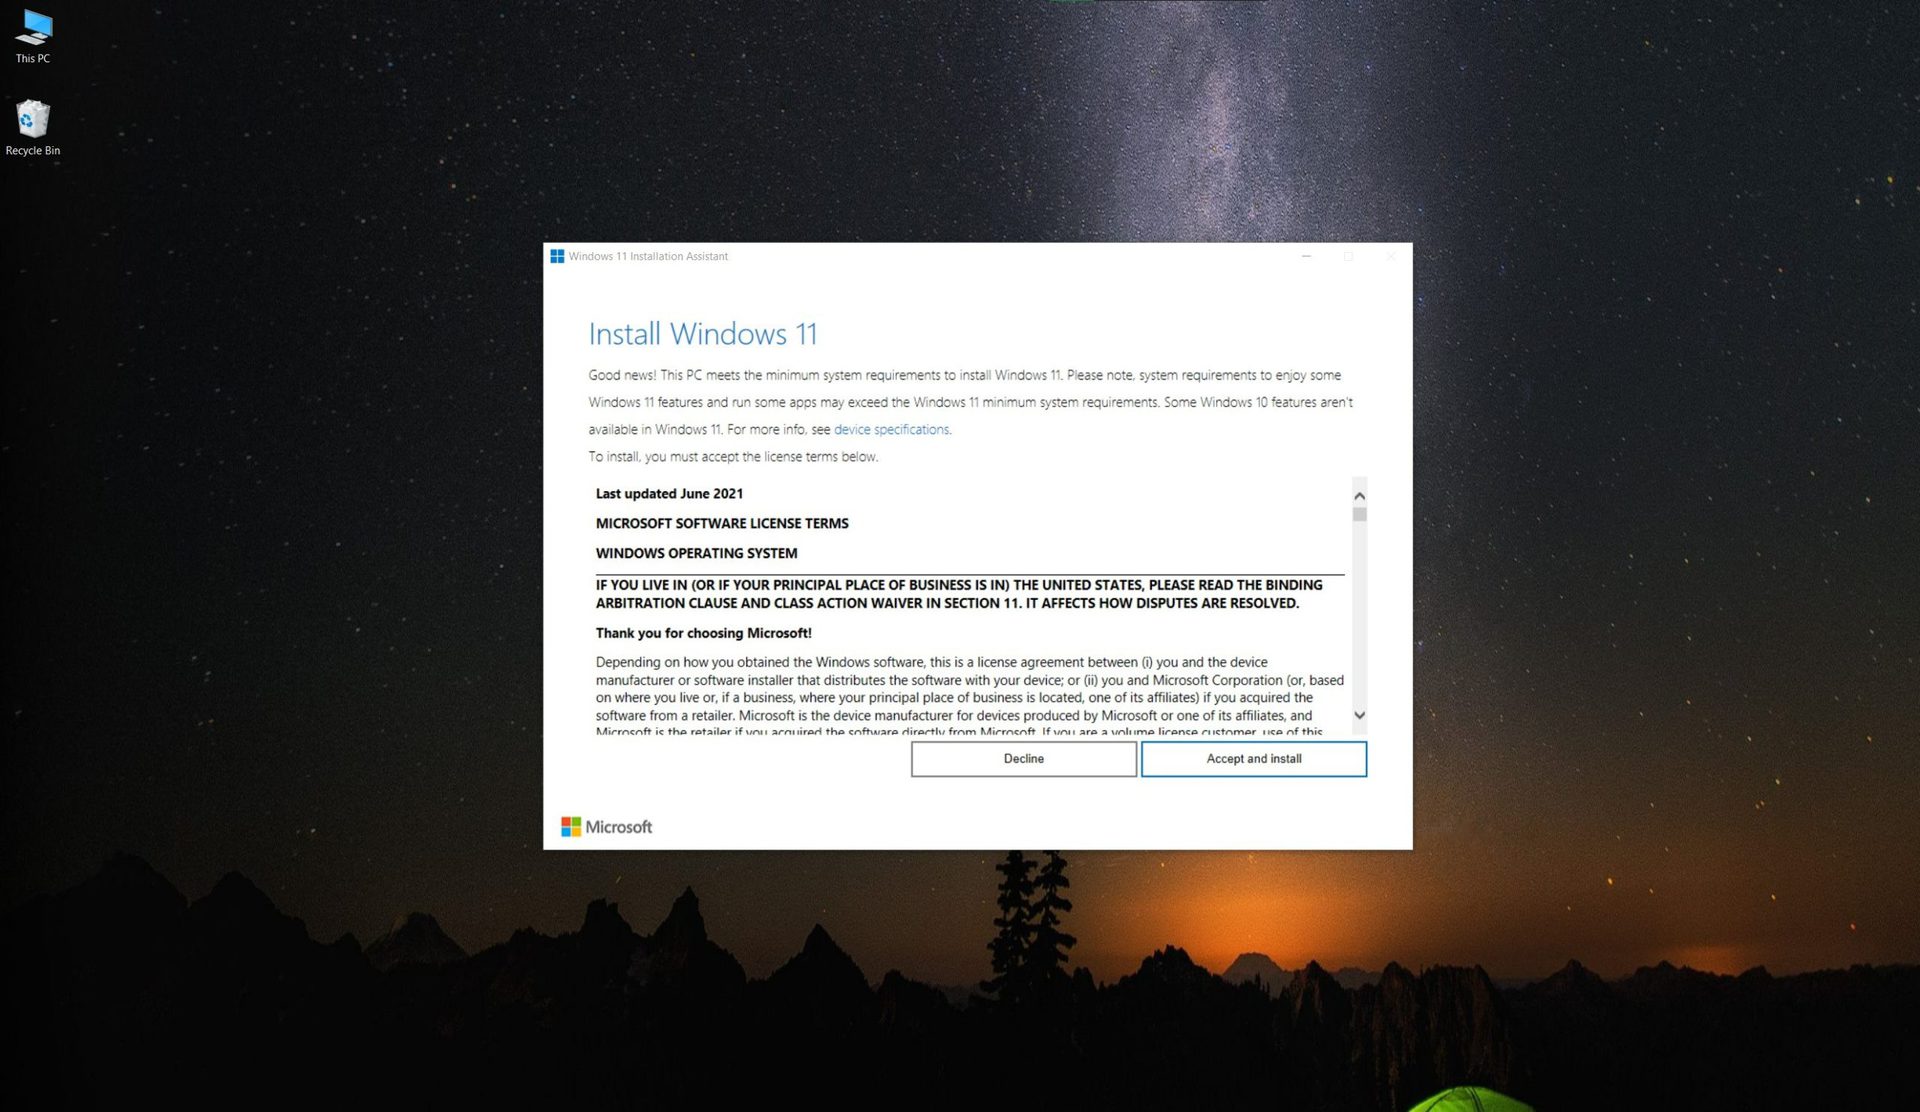 Windows 11 installation assistant license